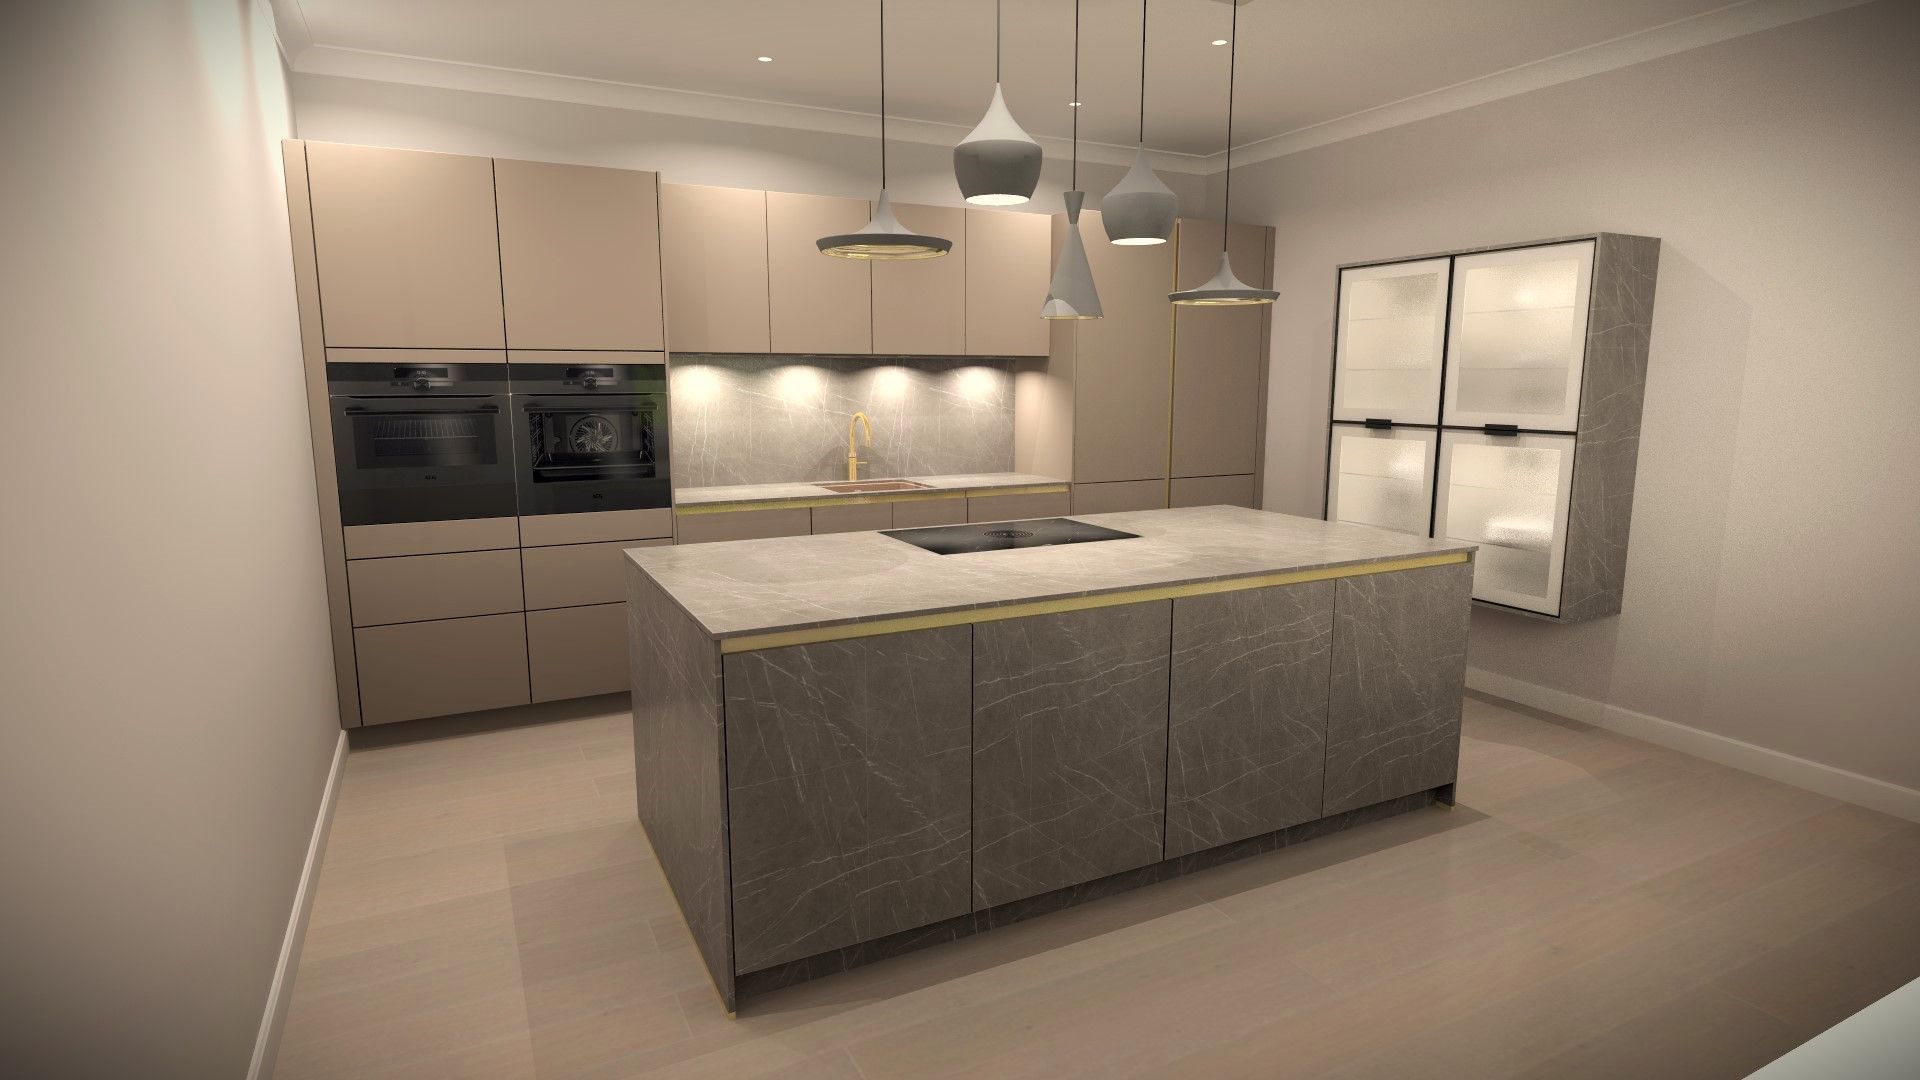 Mid range handless large kitchen in grey